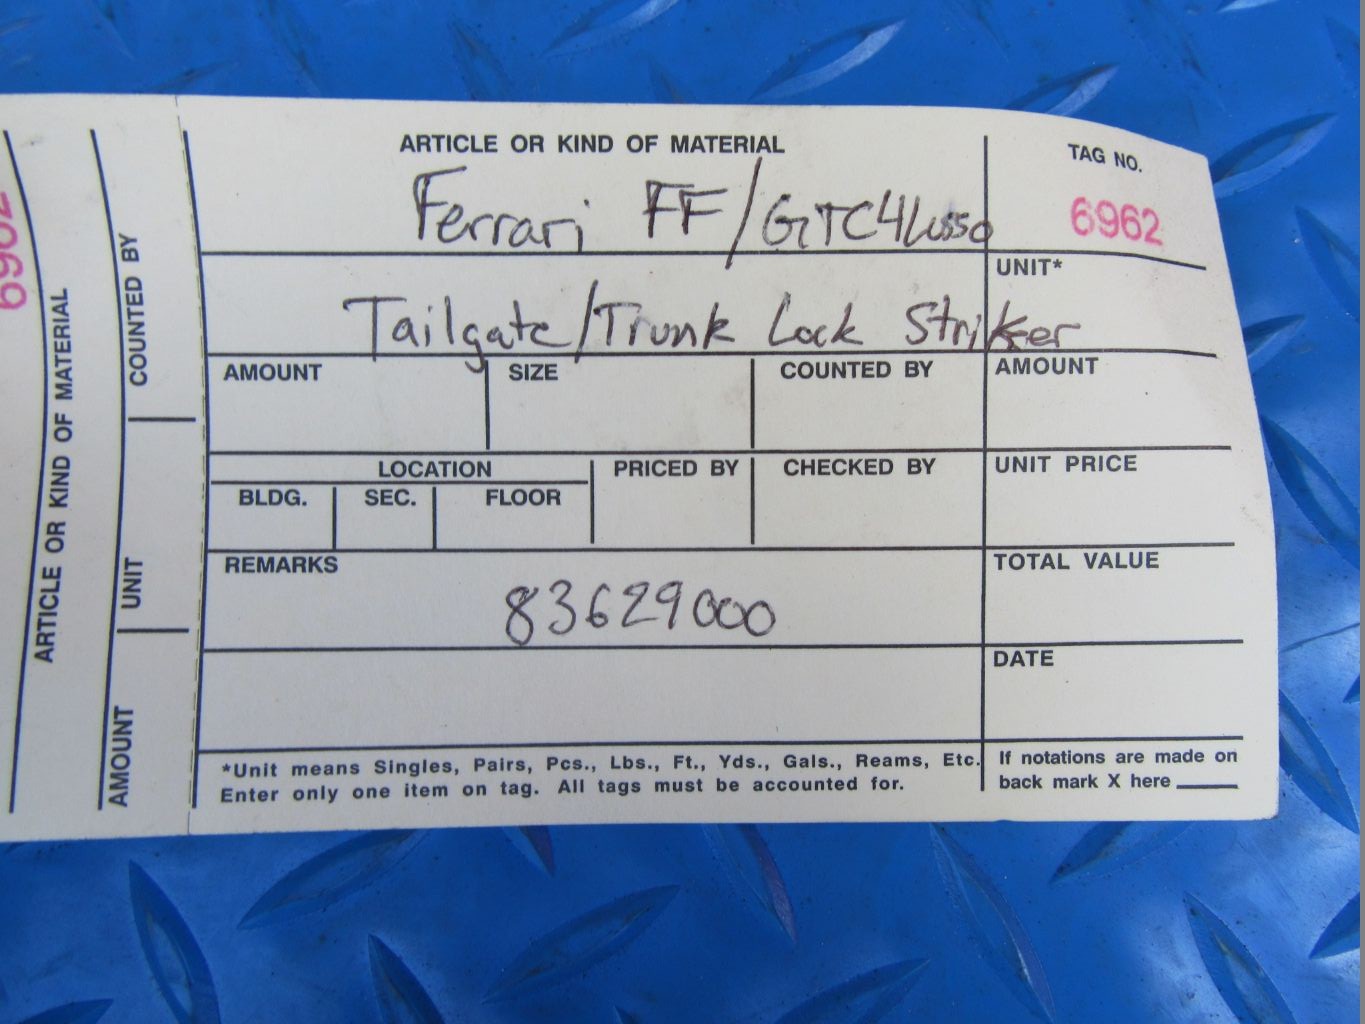 Ferrari FF GTC4 Lusso liftgate trunk lock striker #6962